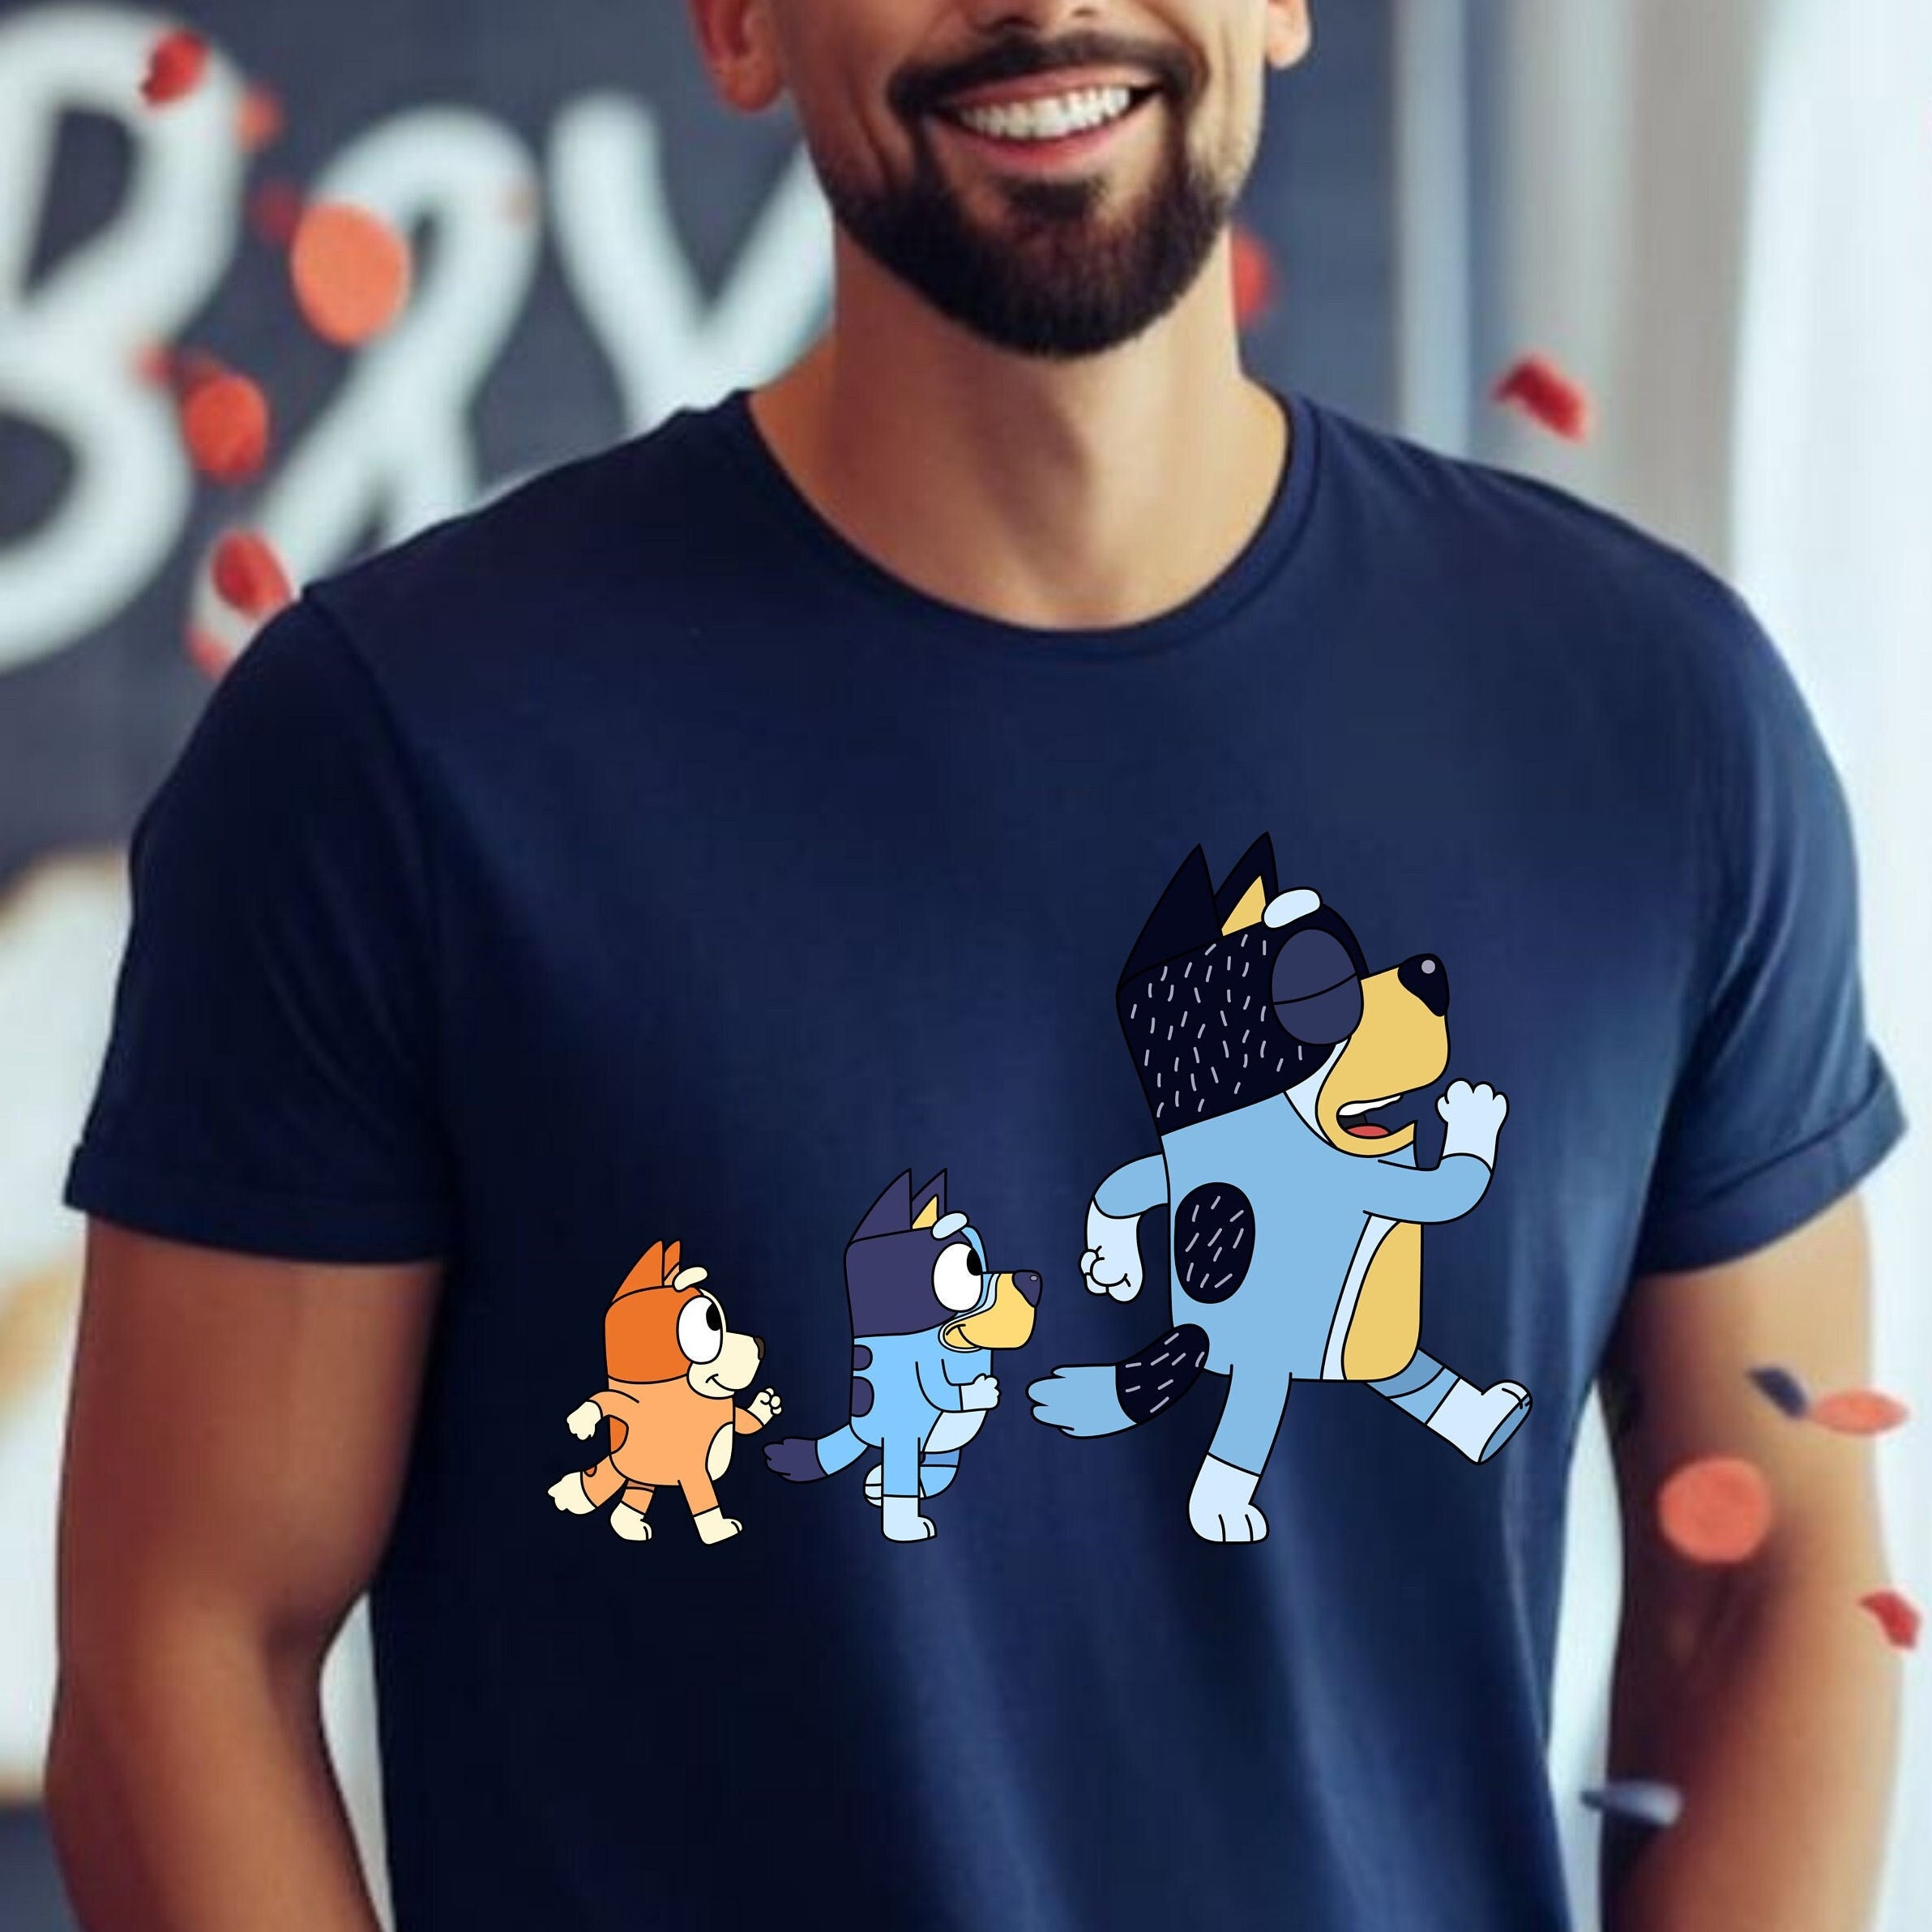 Bluey Dad Bandit Heeler Adult Shirt  Cool Fathers Day Shirt - Inspire  Uplift